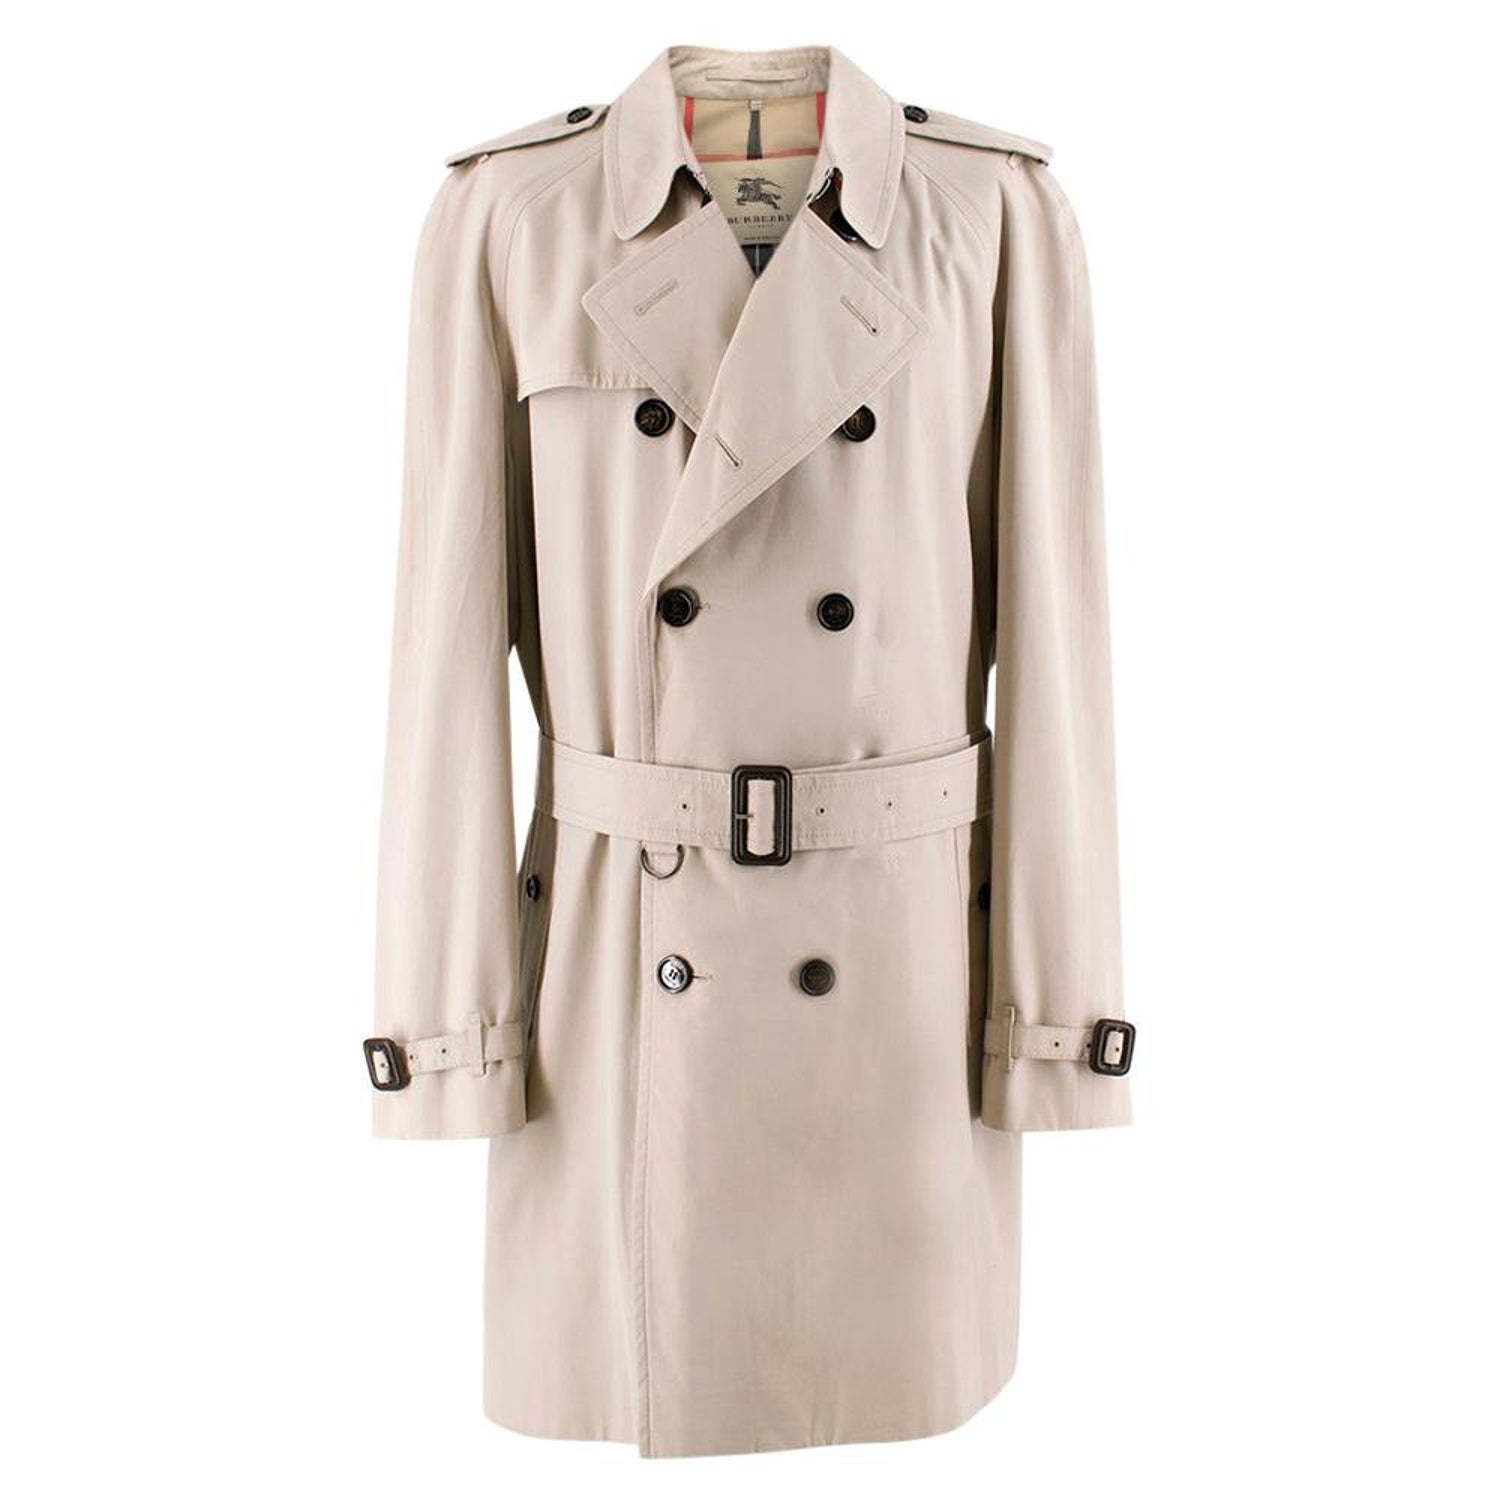 Burberry Trench Coat Men 4 For Sale on 1stDibs | burberry trench coat second hand, mens trench coat vintage, mens burberry trench coat sale